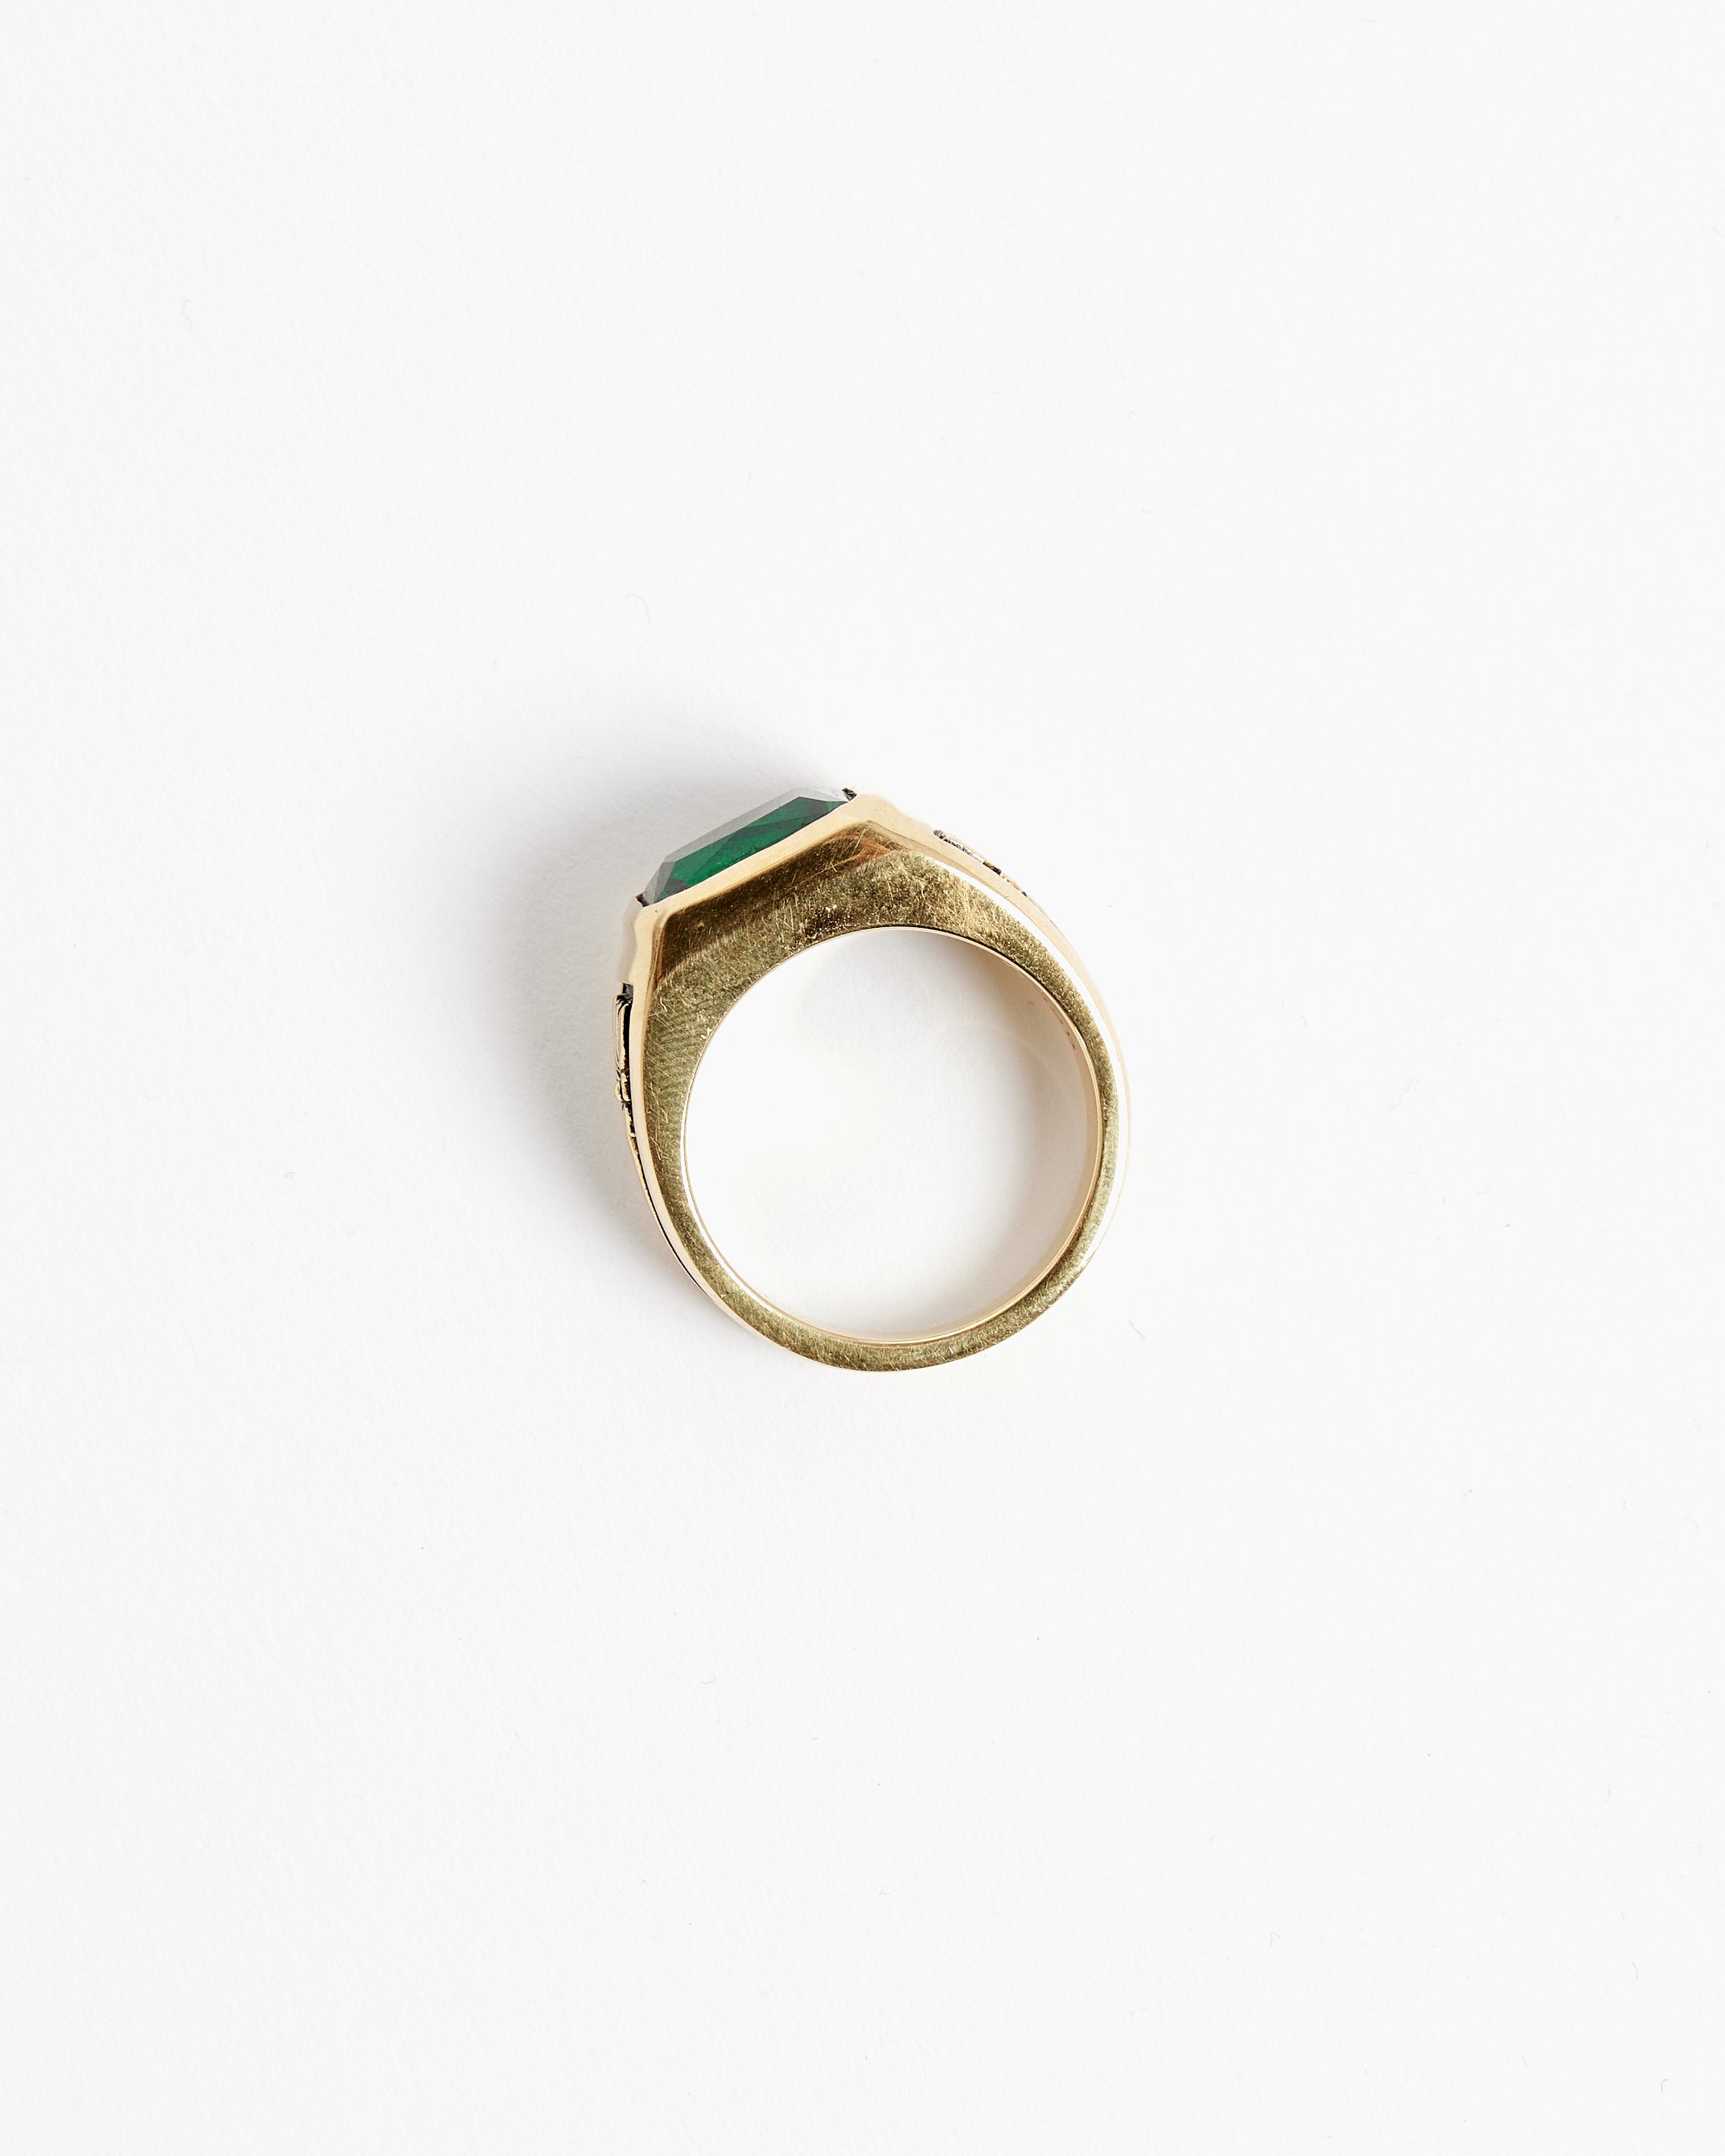 Midnight Ring Slim in 14k Gold/Emerald